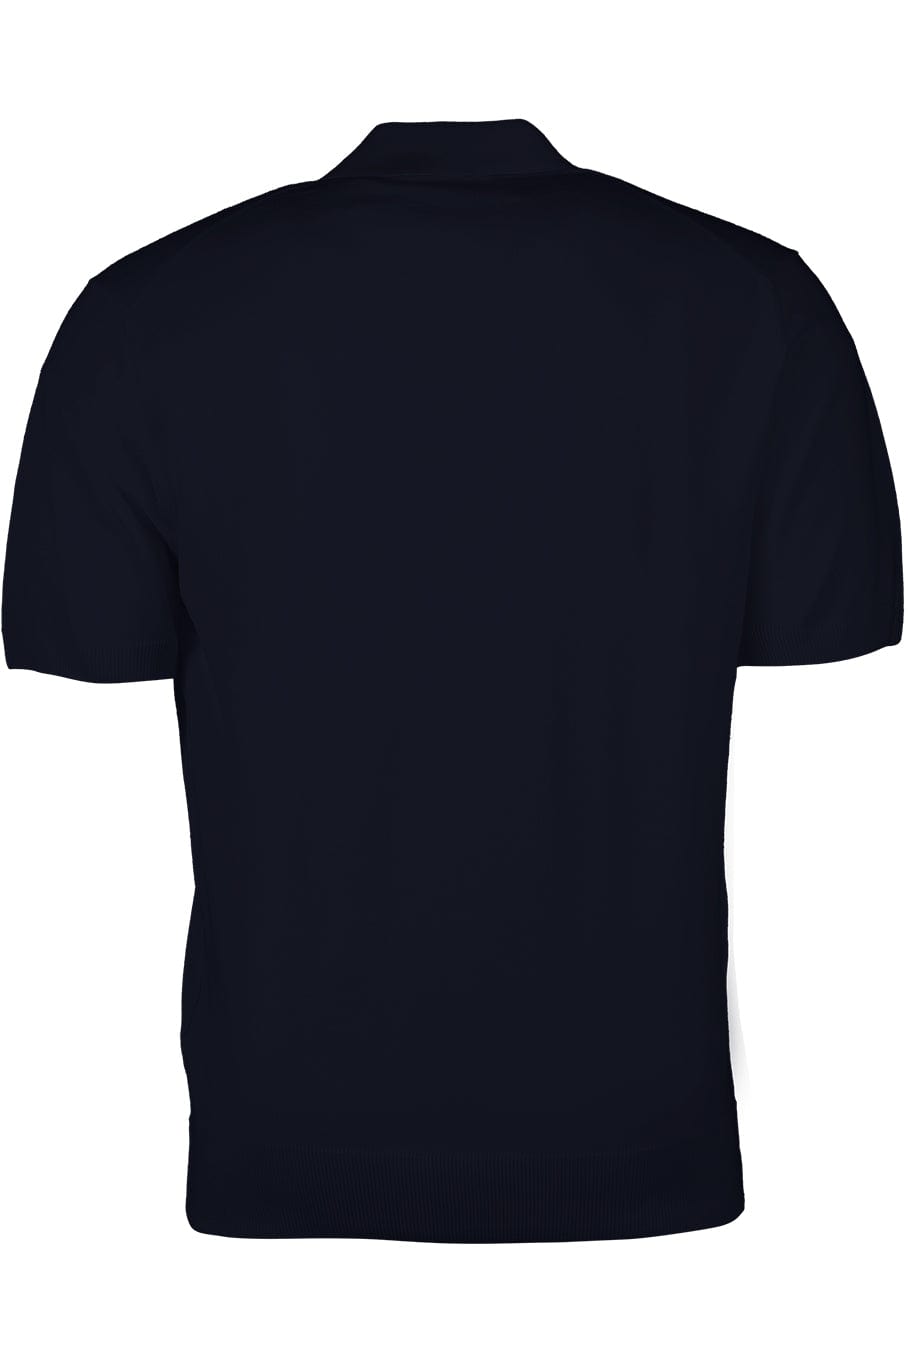 ORLEBAR BROWN-Horton Ob Stripe Polo Shirt - Navy-